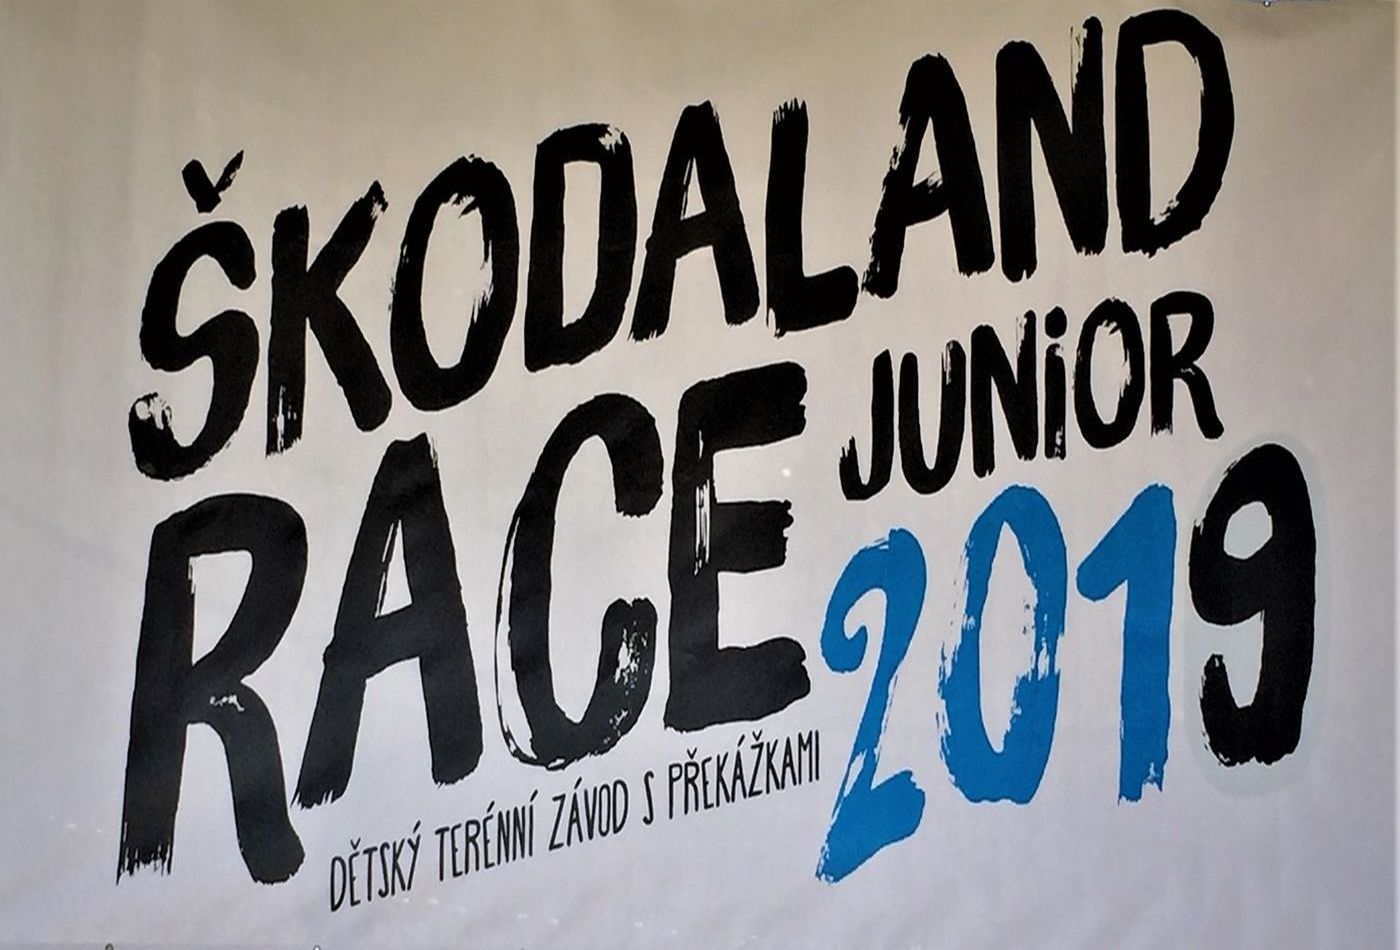 Škodaland-Race-Junior-623-1